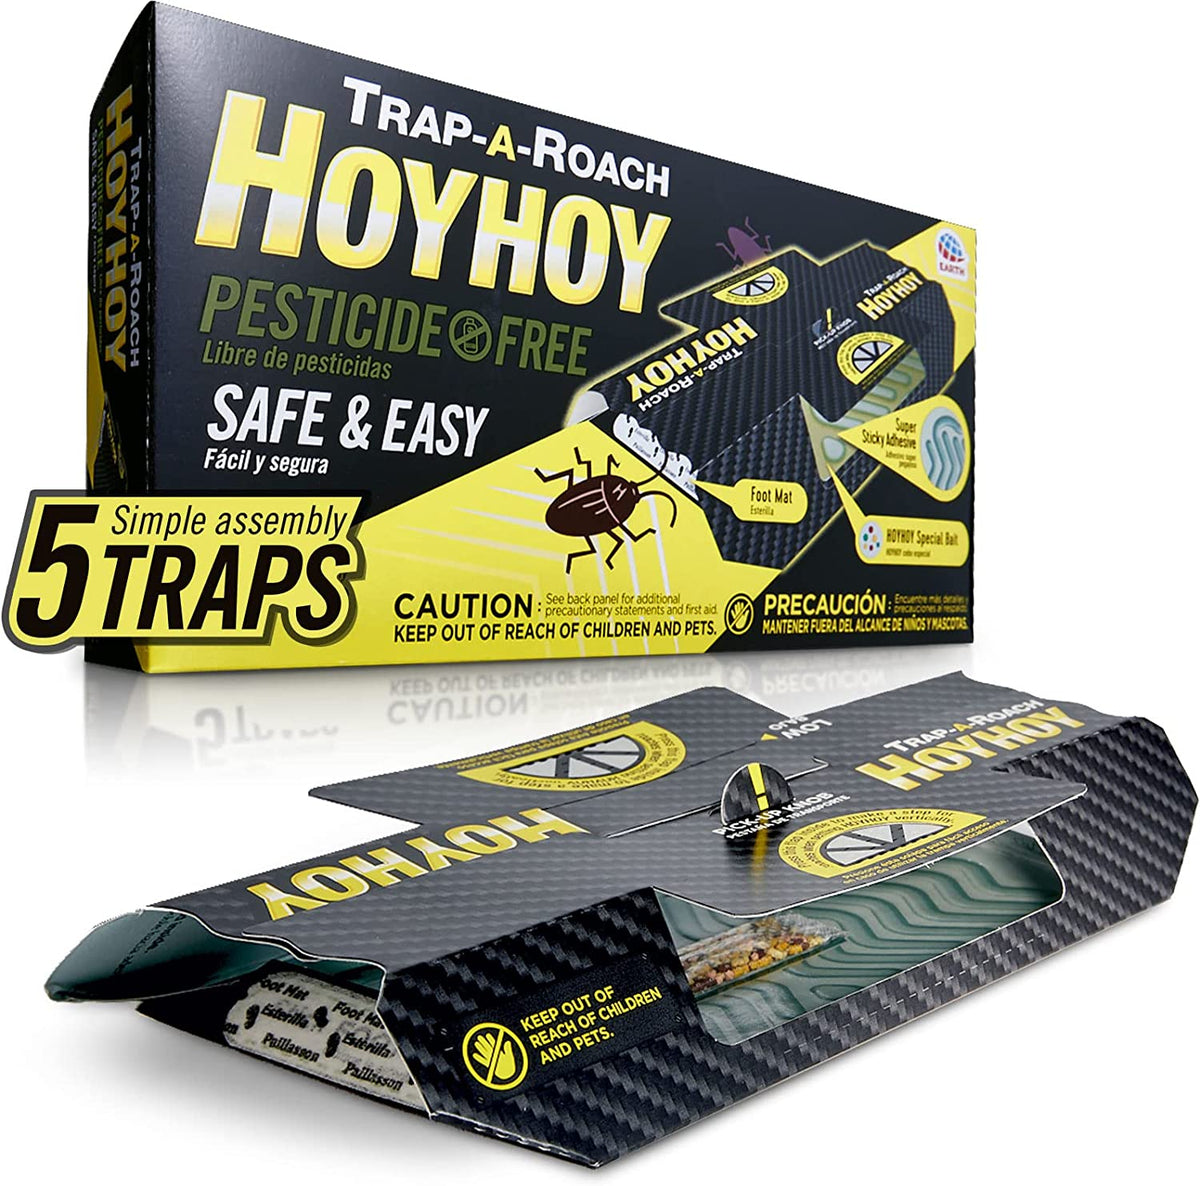 HOY HOY Trap A Roach - 5&amp;nbsp;Traps